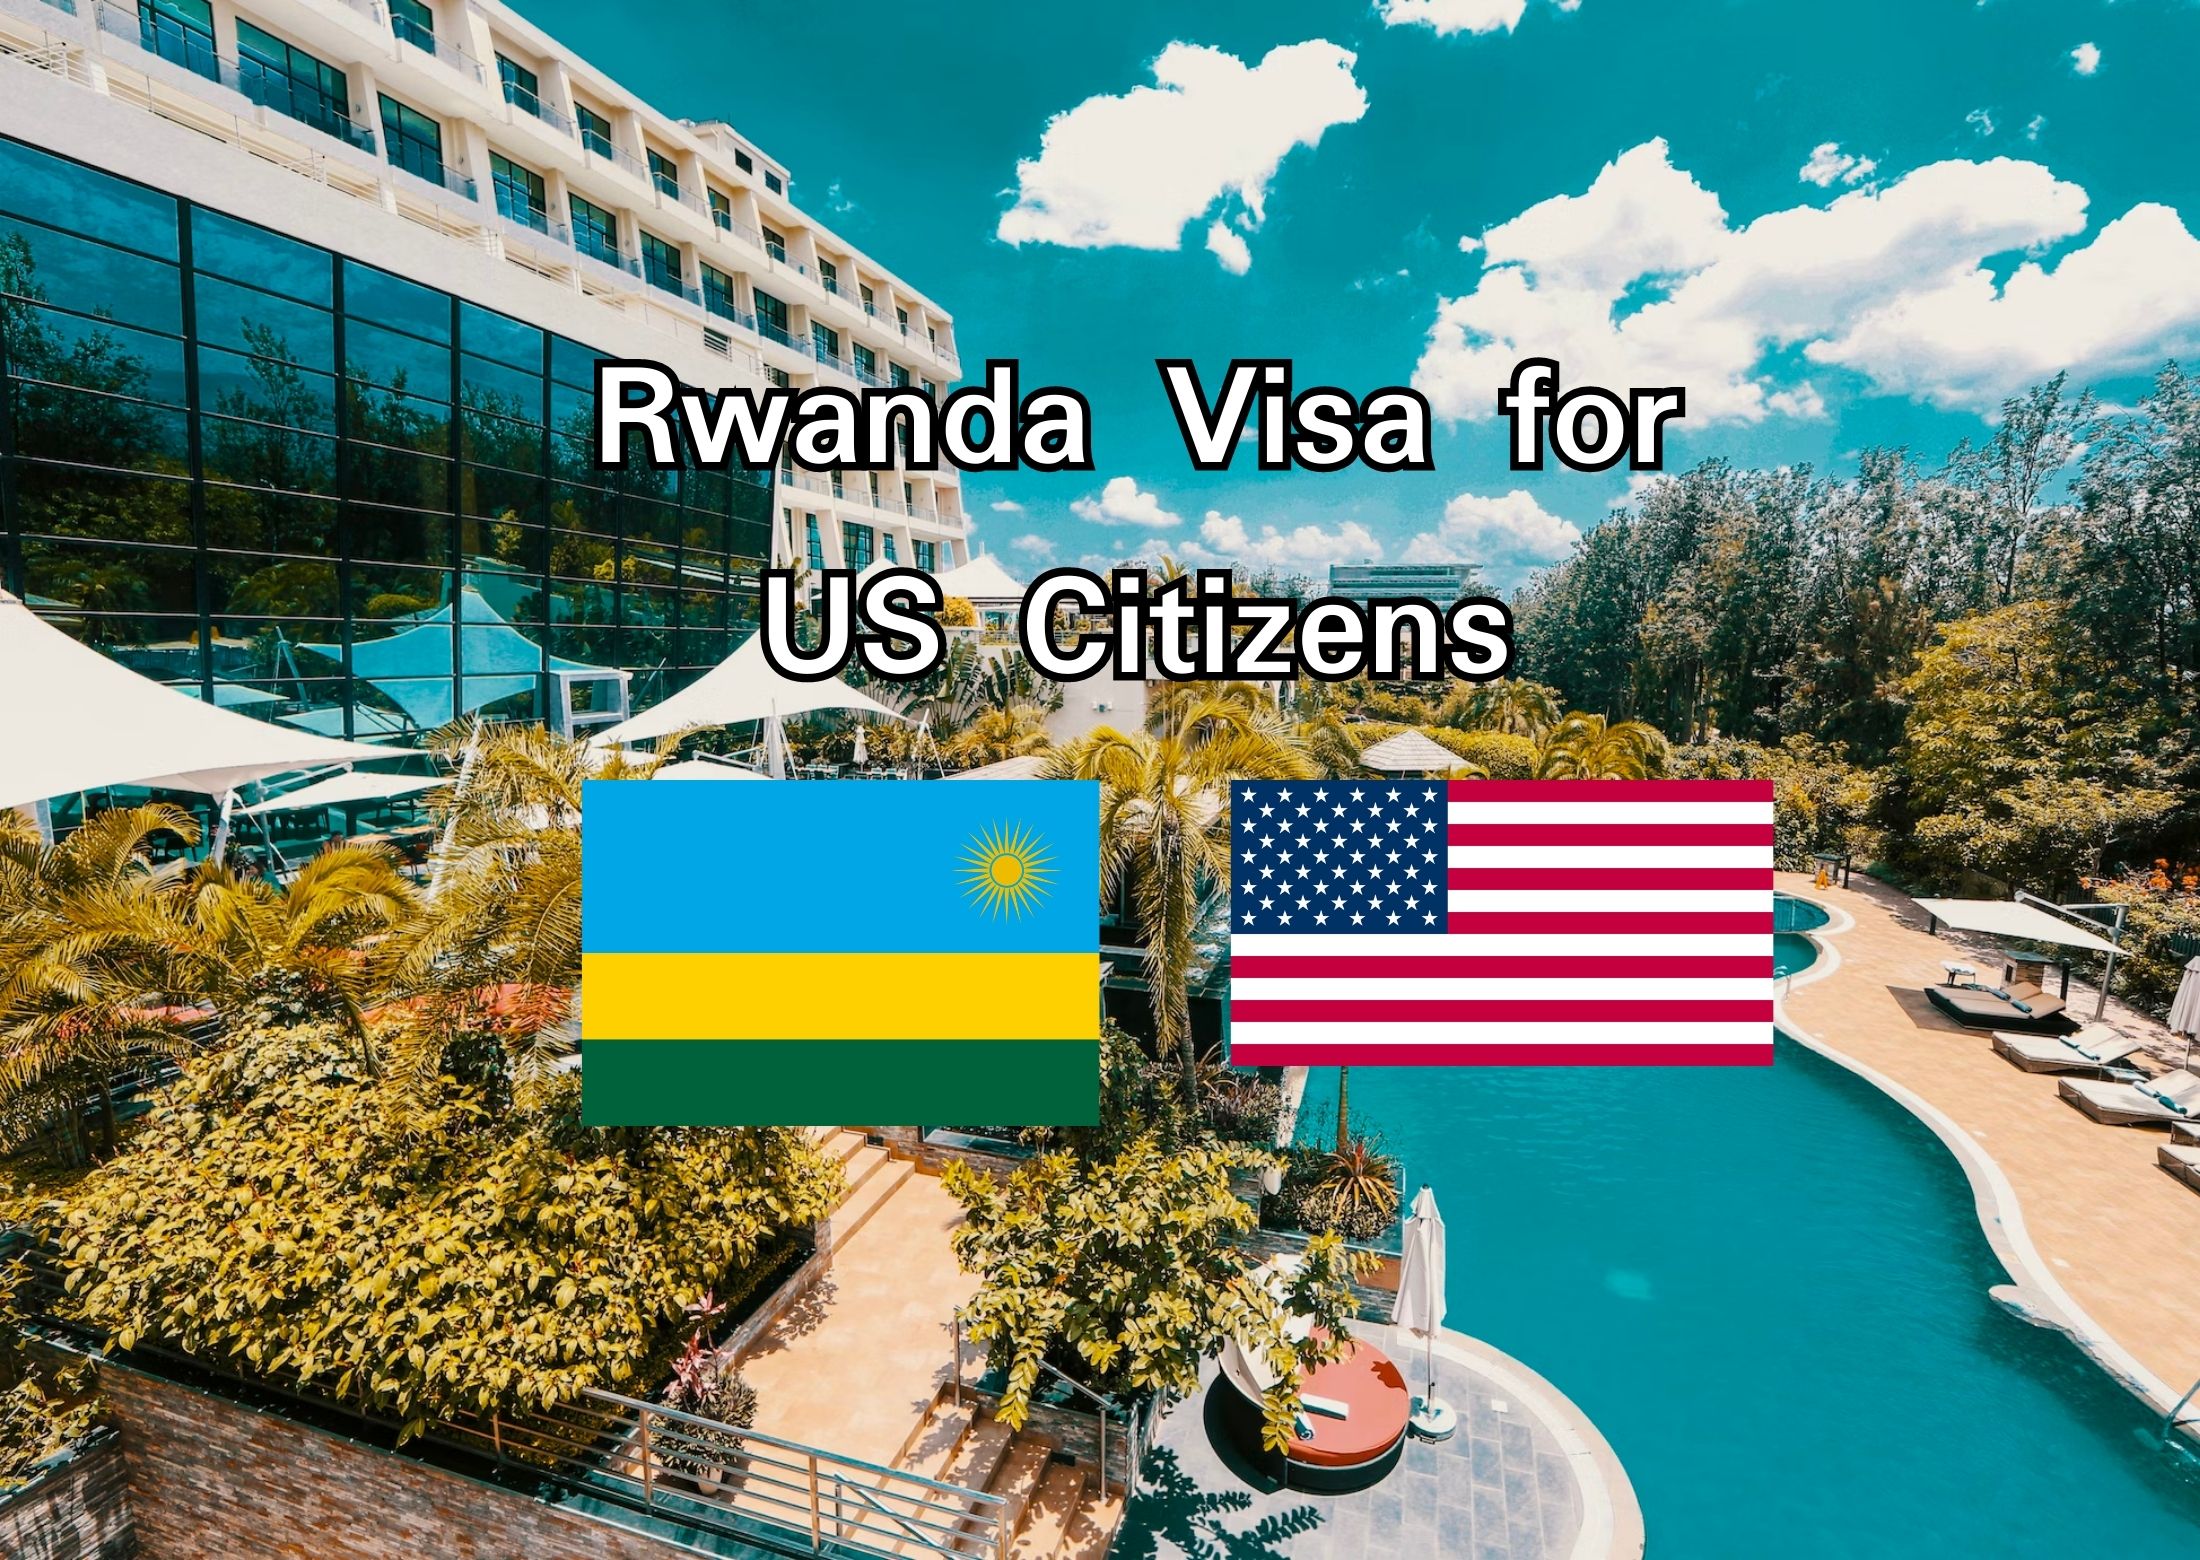 Rwanda visa for US Citizens